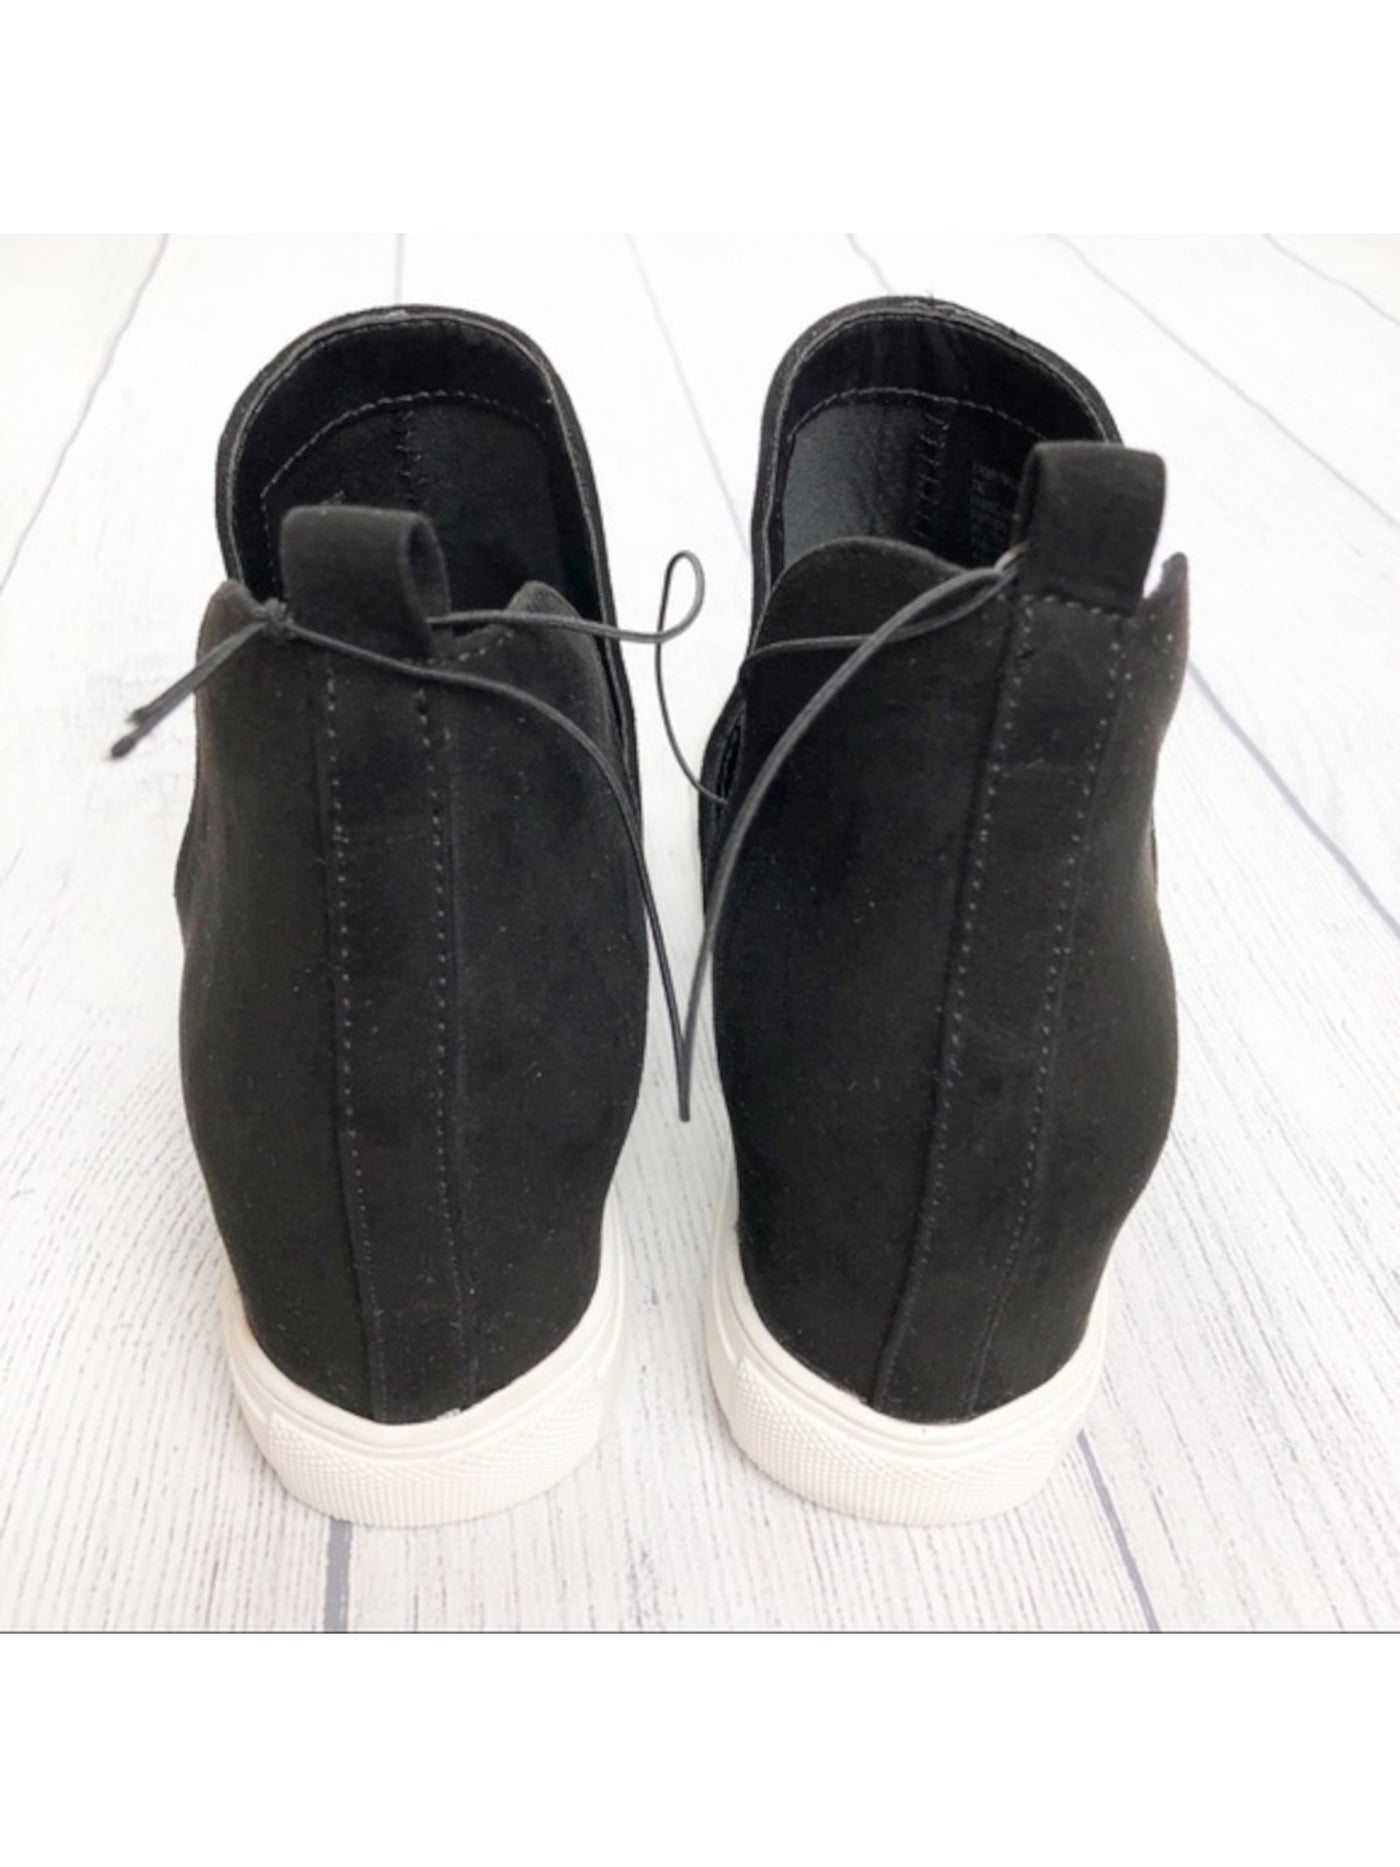 STEVEN Womens Black 1" Platform Cutouts Hidden Heel Camryn Round Toe Wedge Slip On Athletic Sneakers Shoes 9.5 M